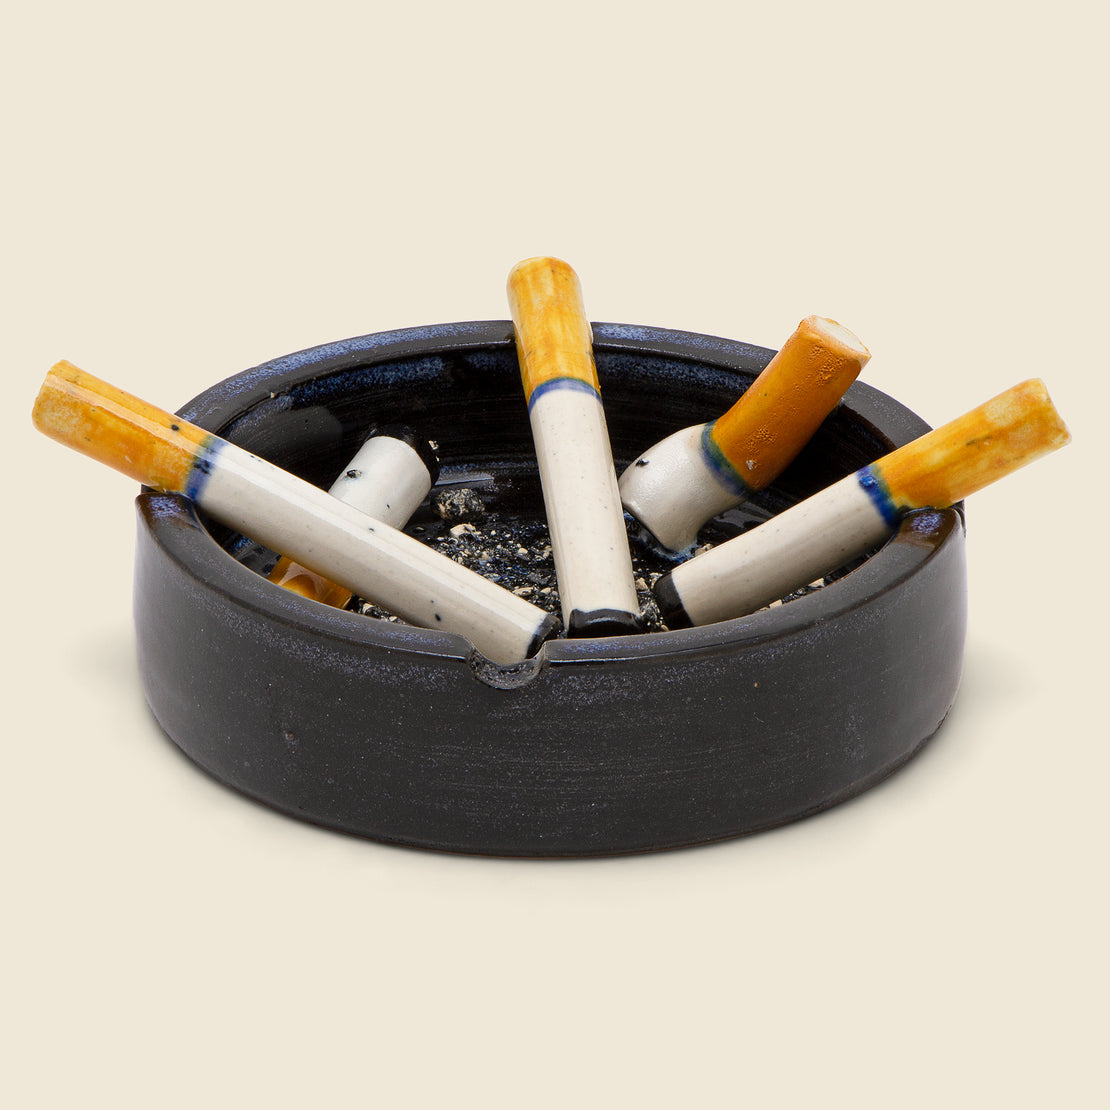 Cigarette Ashtray - Black